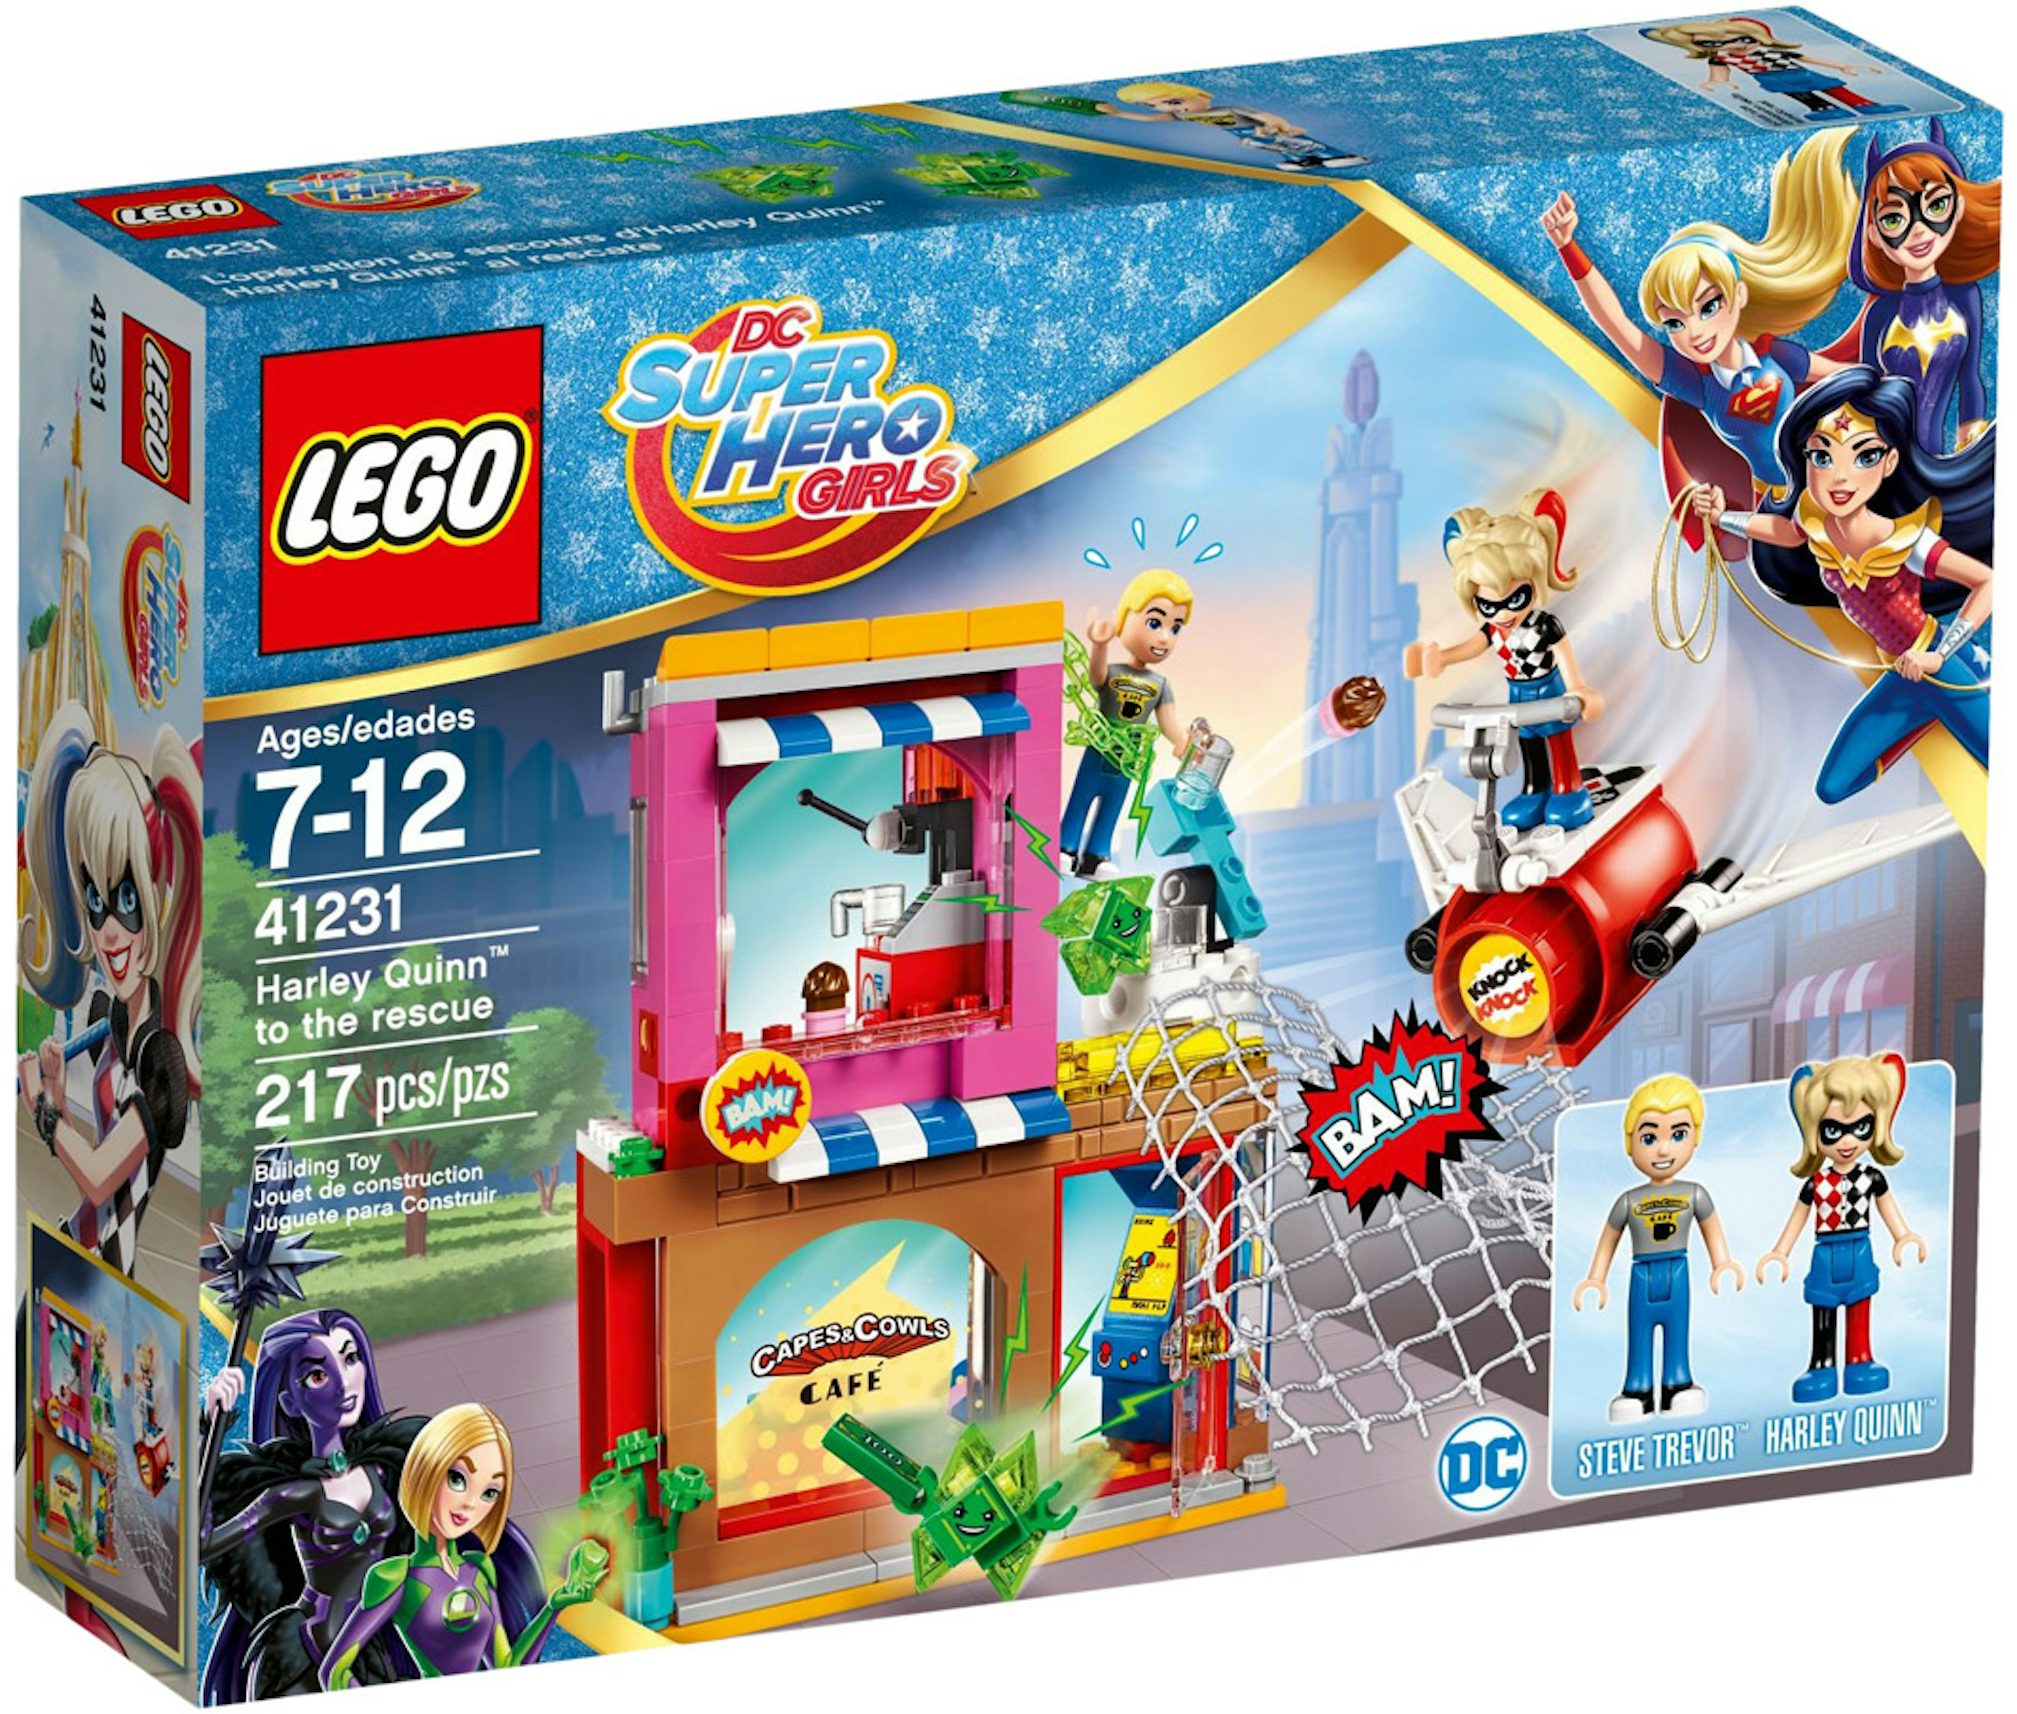 https://images.stockx.com/images/LEGO-DC-Super-Hero-Girls-Harley-Quinn-to-the-Rescue-Set-41231.jpg?fit=fill&bg=FFFFFF&w=1200&h=857&fm=jpg&auto=compress&dpr=2&trim=color&updated_at=1642795160&q=60